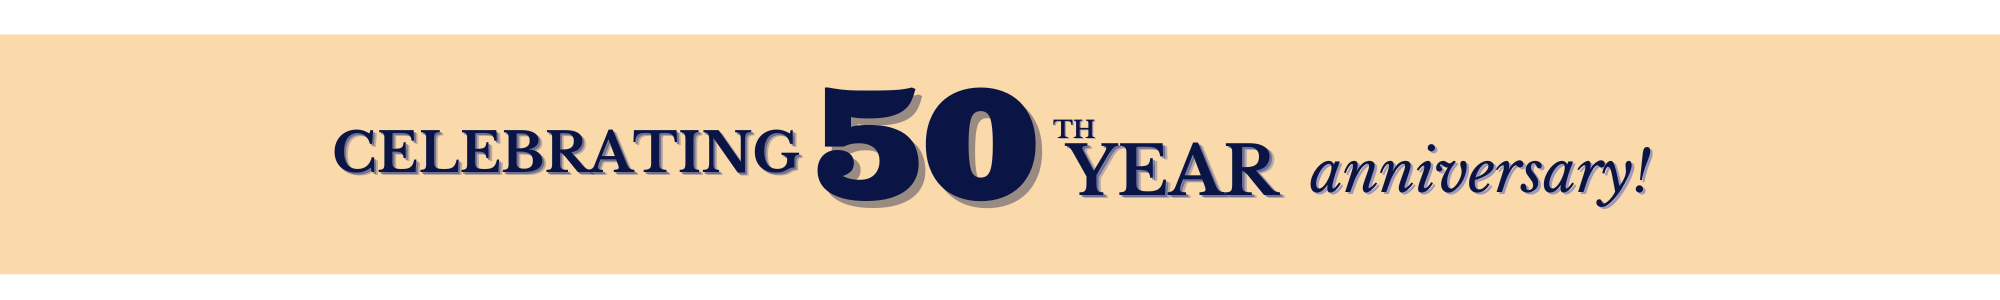 graphic celebrating 50th anniversary 